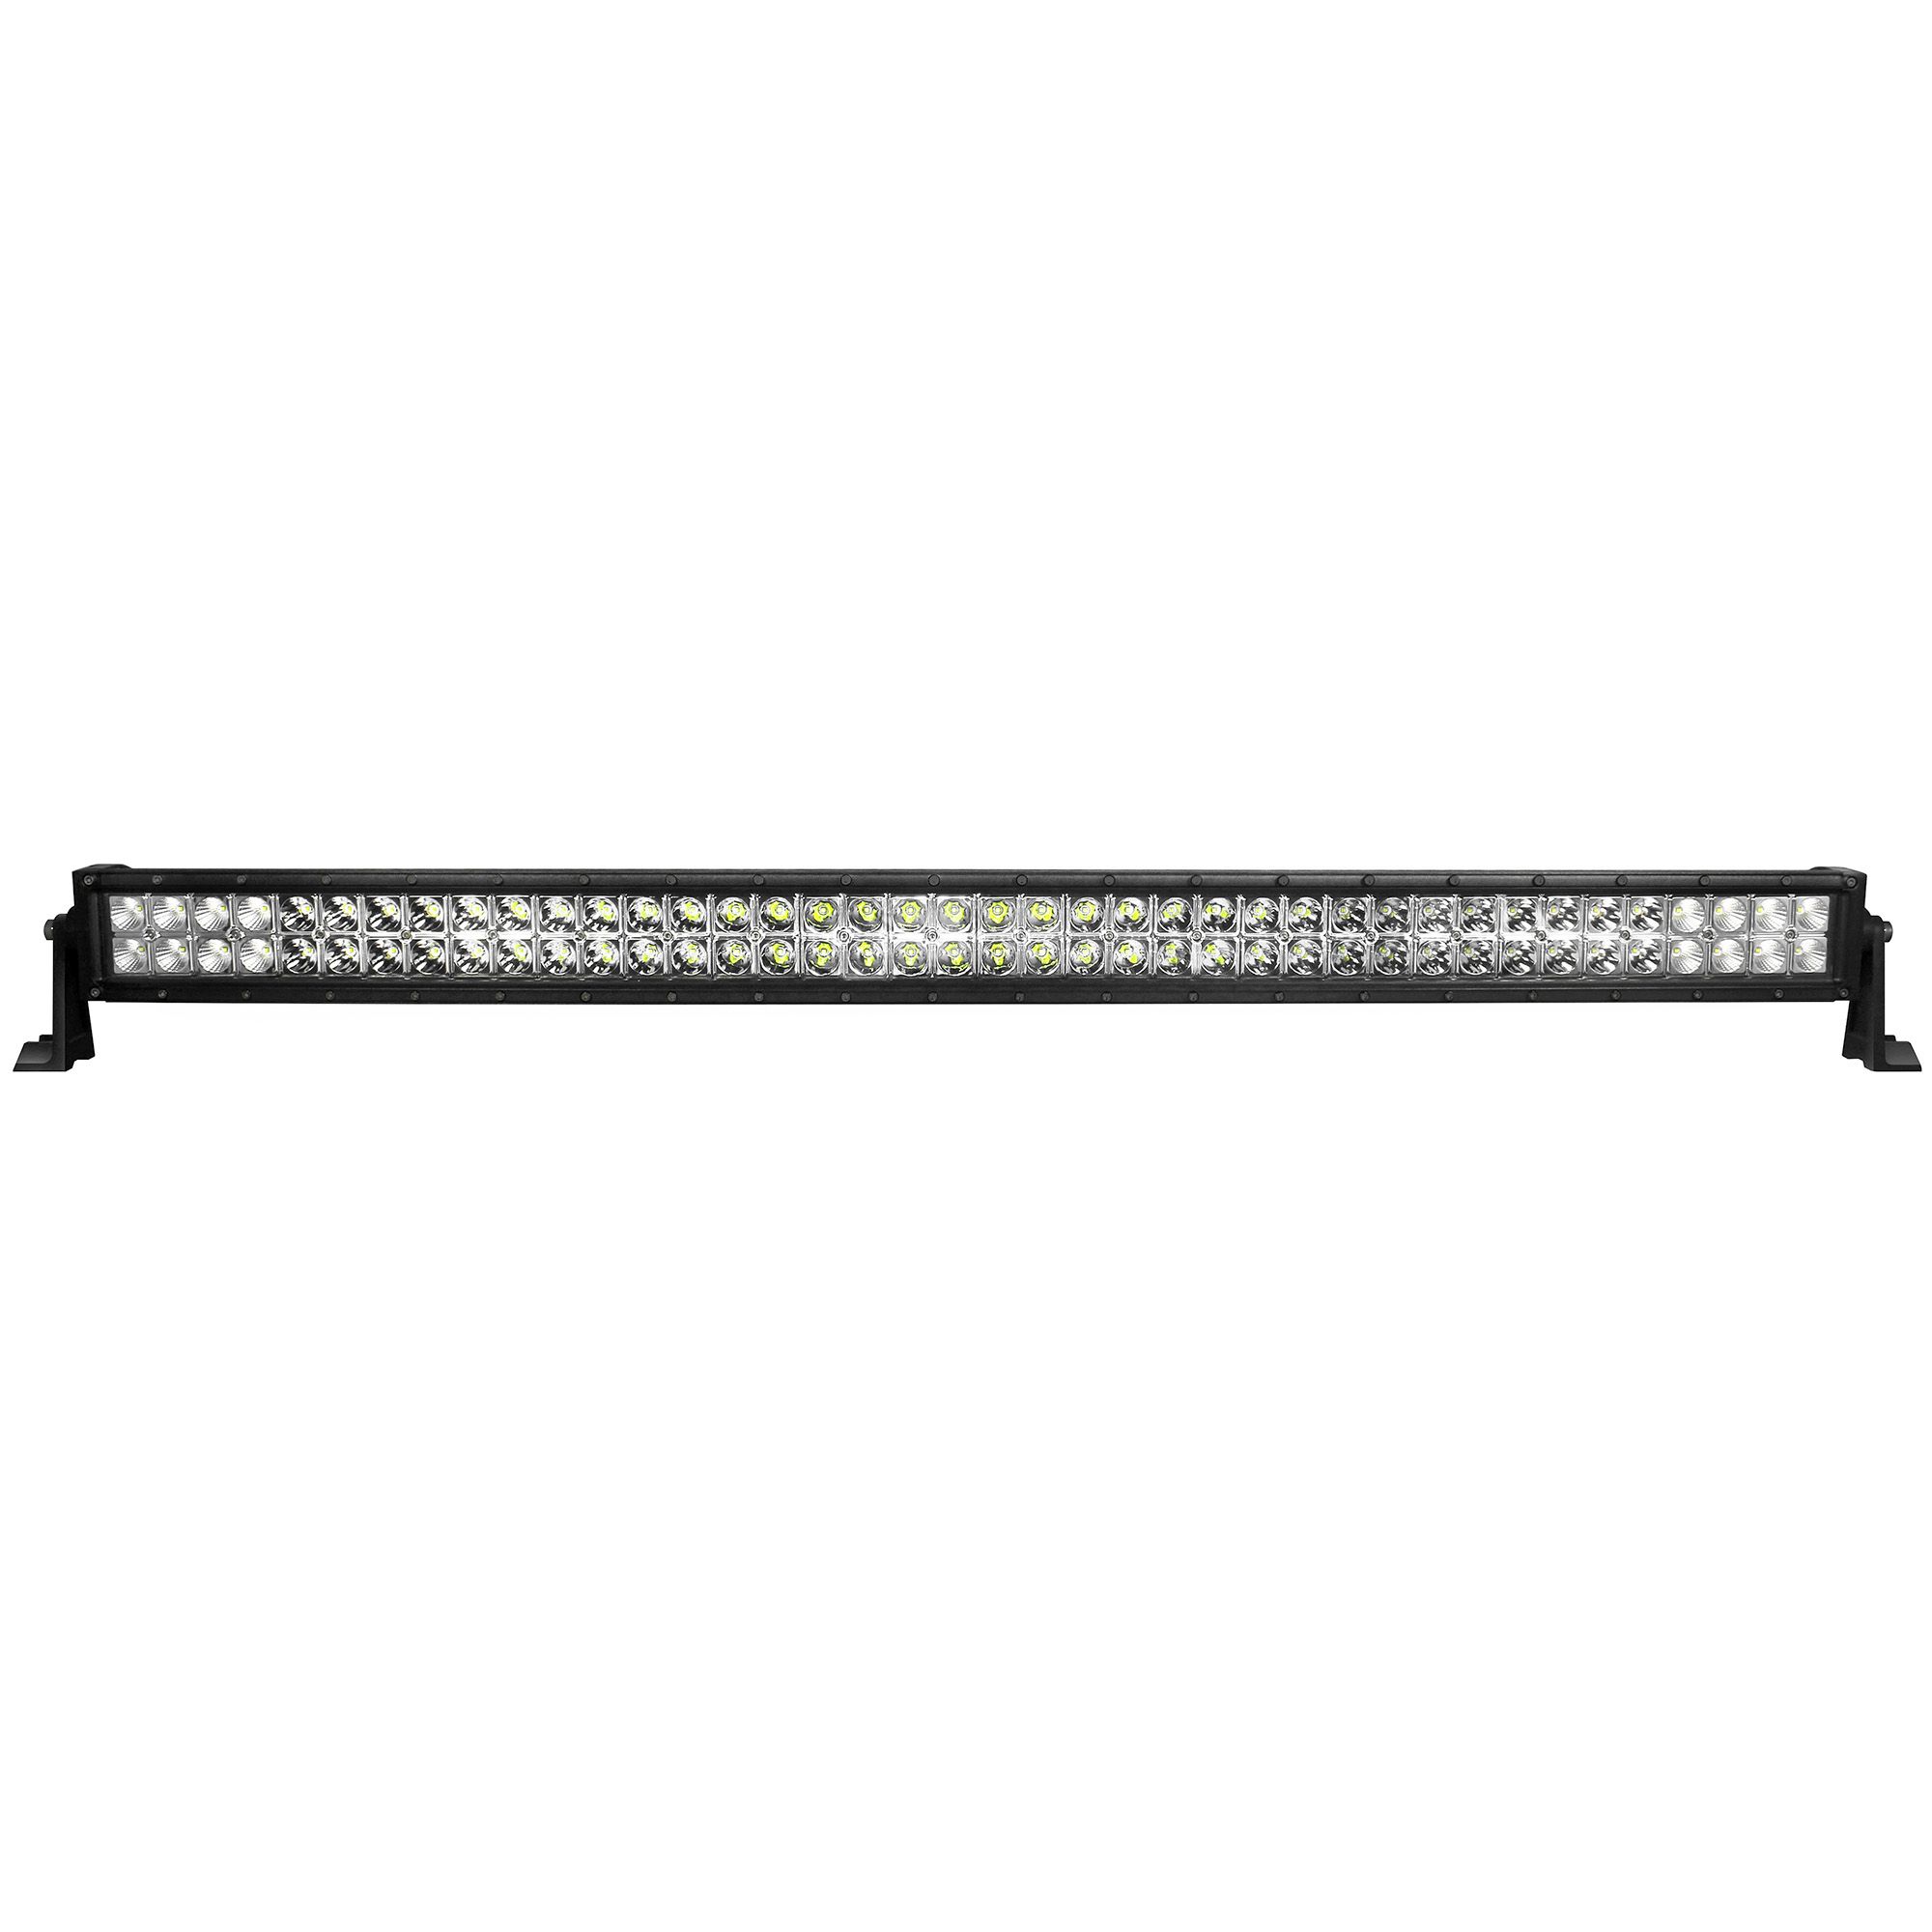 Go Rhino752404113CDS - Bright Series Lights - 41.5" Double Row LED Light Bar -  Black